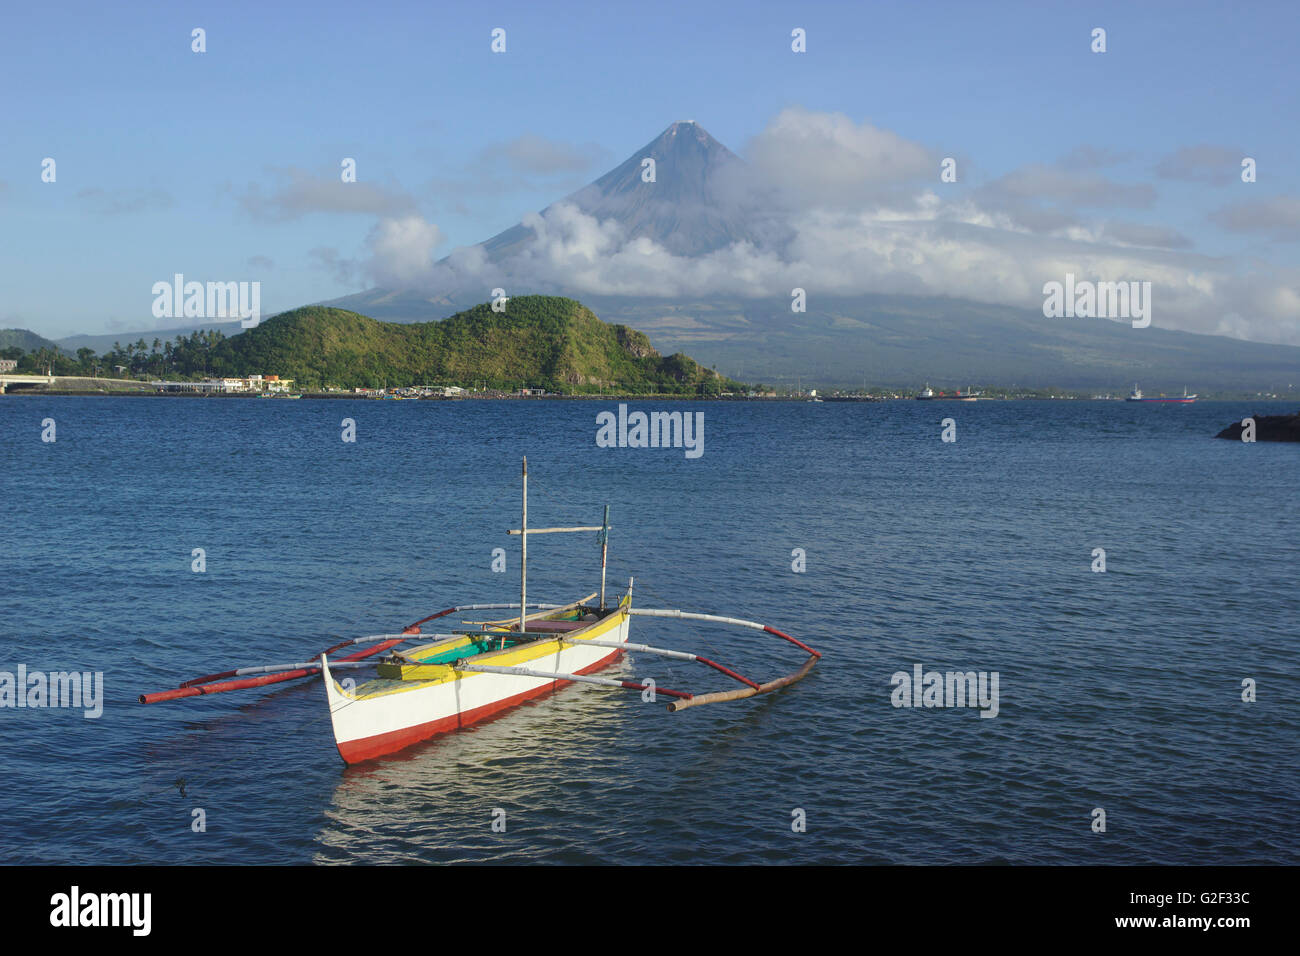 Mount Mayon and outrigger boat, bangka, on Gulf of Albay near Legazpi, Bicol, Philippines Stock Photo